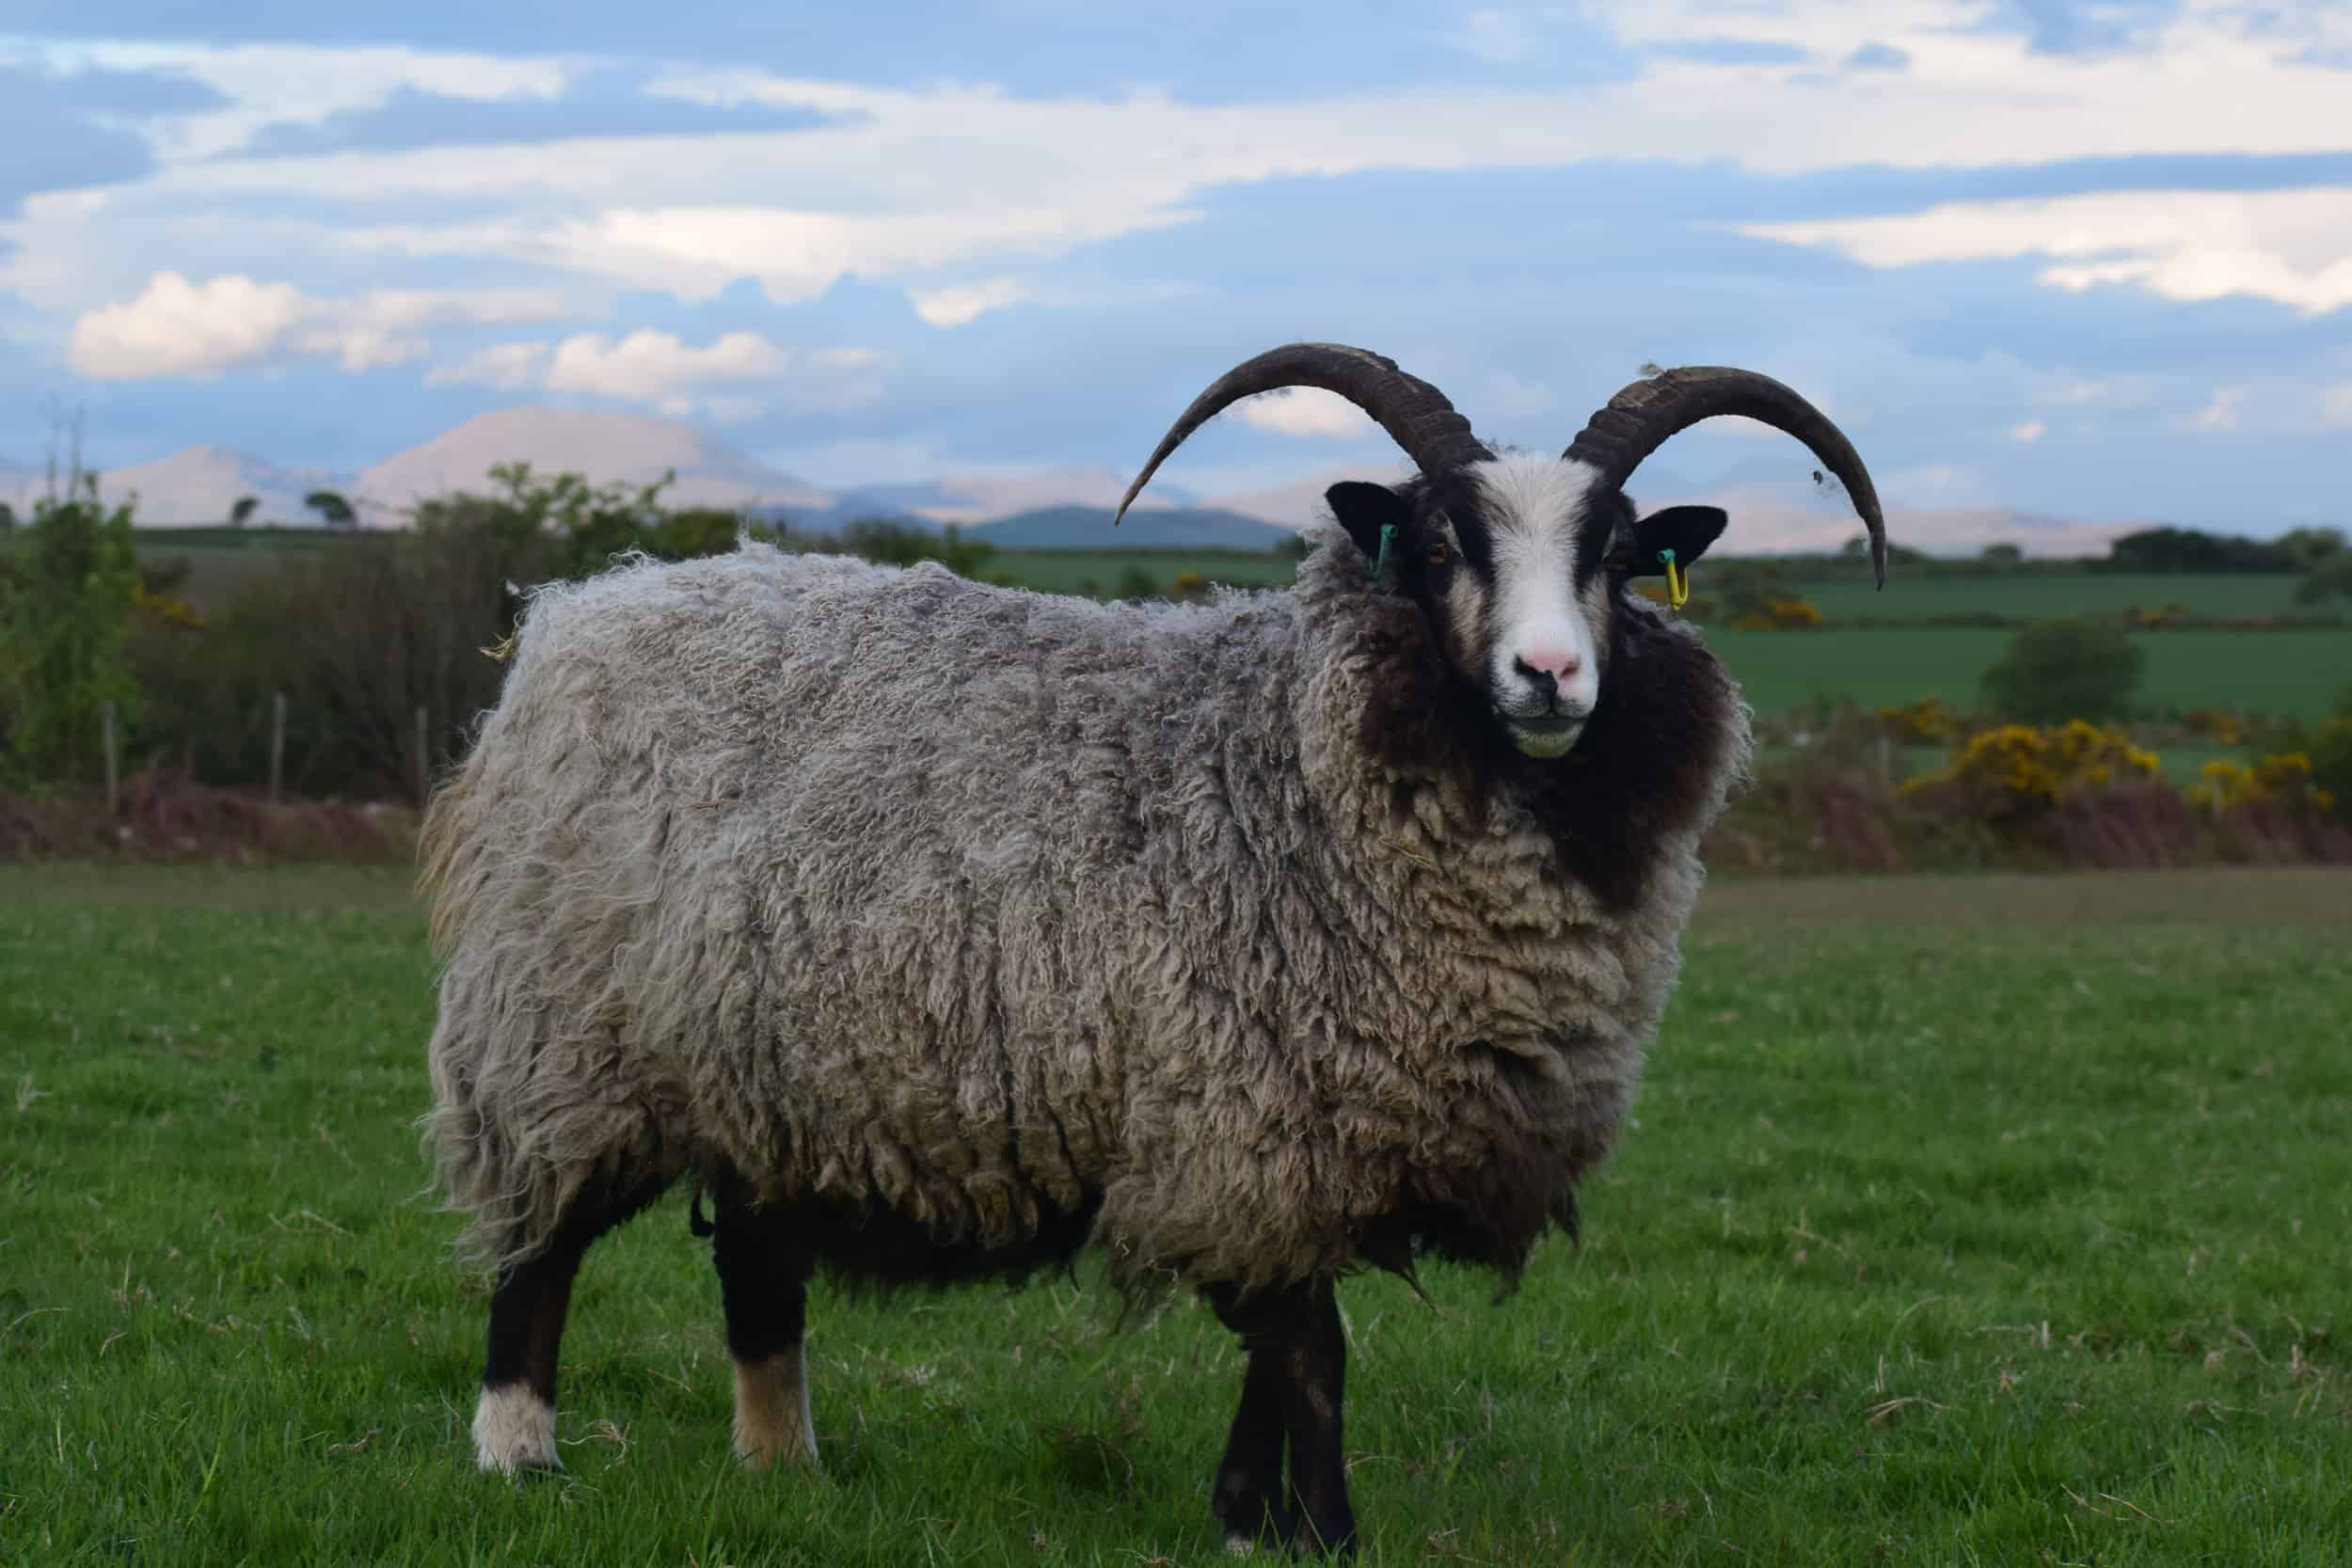 Poppy magnificent horns katmoget badgerface shetland cross jacob sheep lamb cute